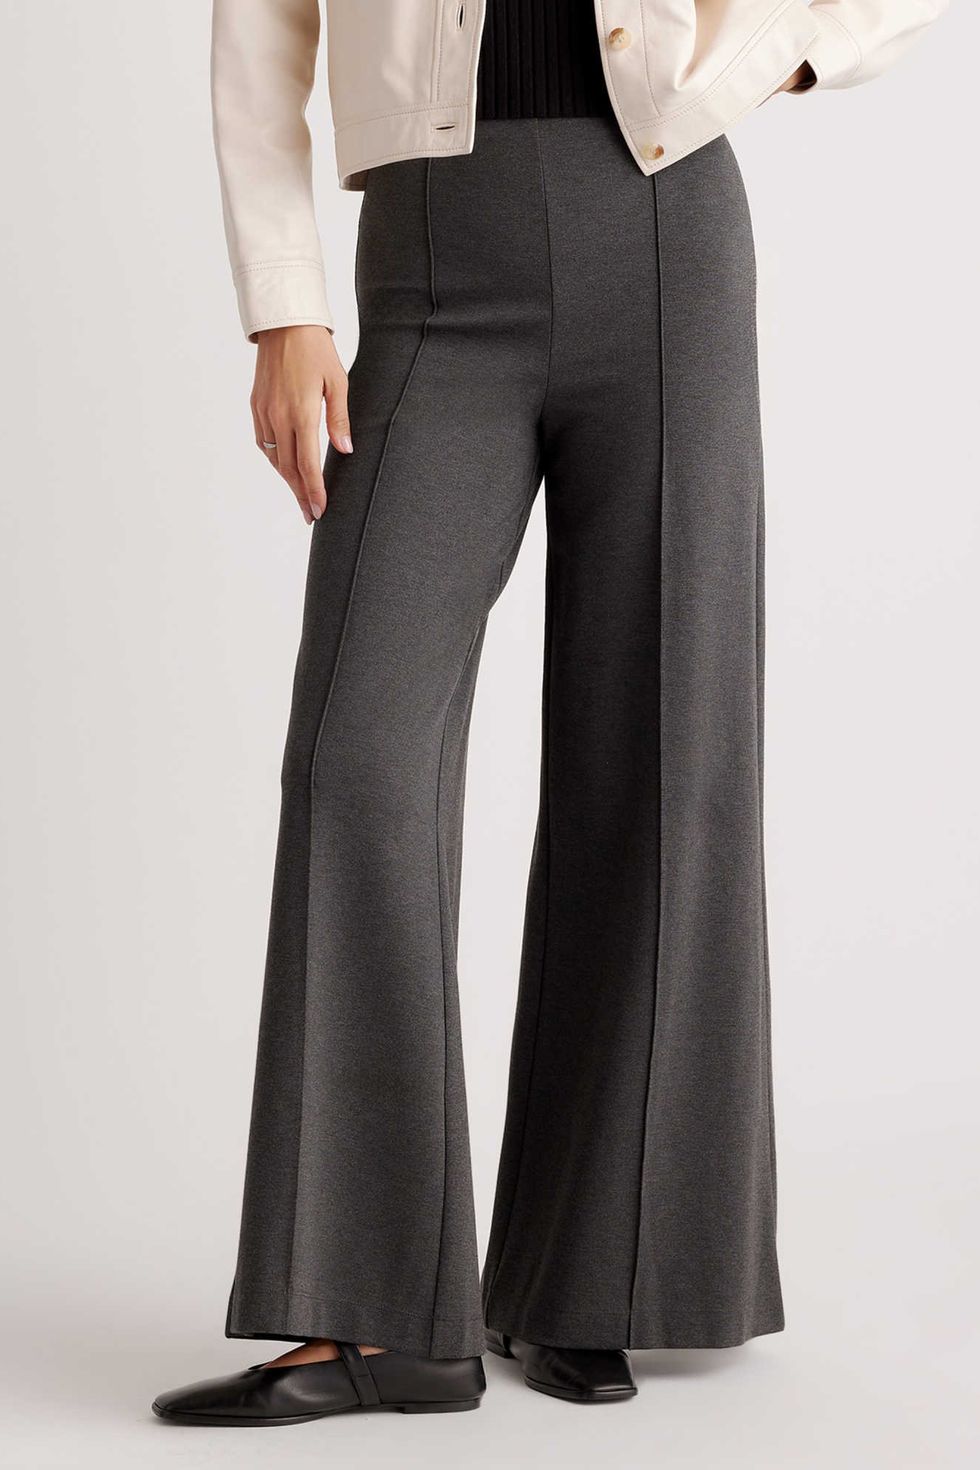 SweatyRocks Women's Casual Wide Leg Pants High Waist Zip Up Office Suit Pants  Trousers Khaki S at  Women's Clothing store